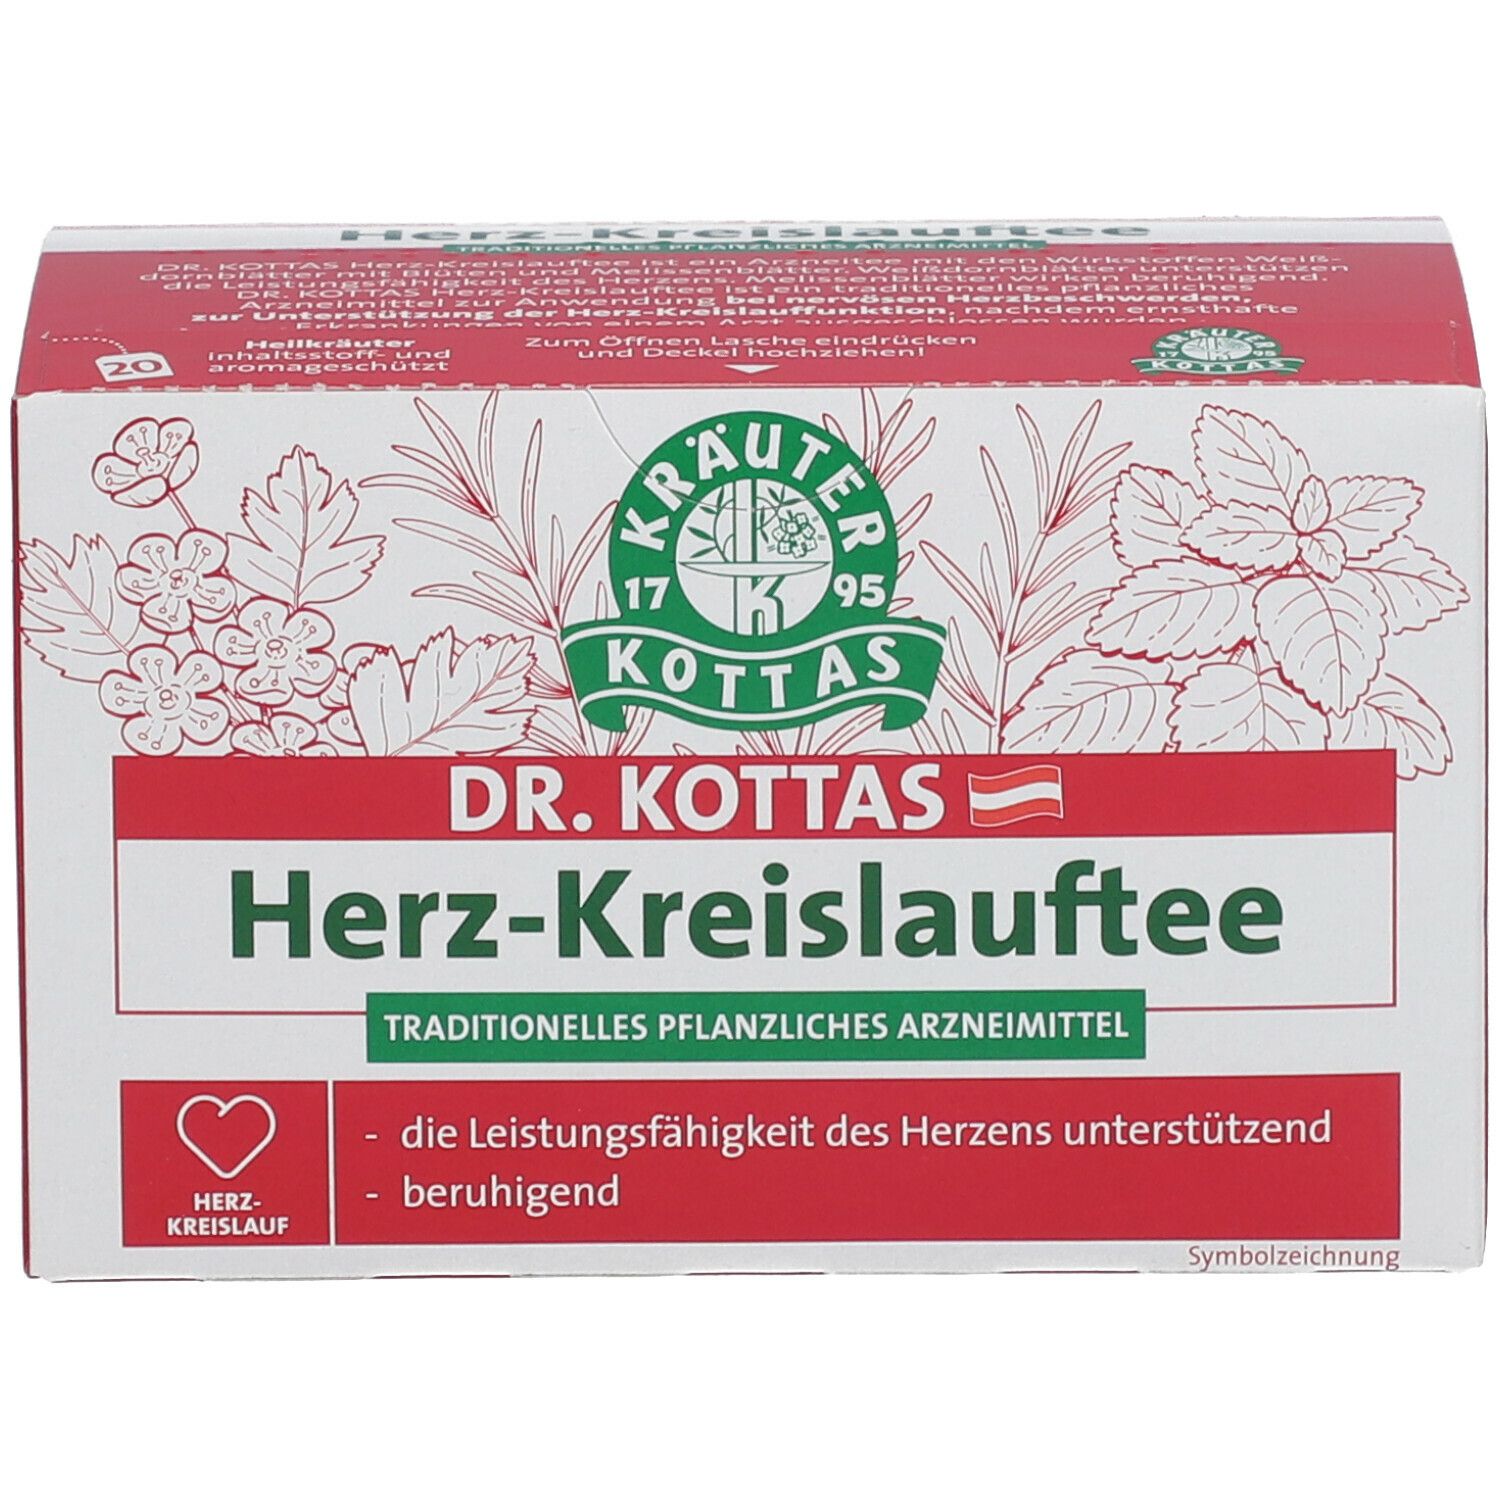 DR. KOTTAS Herz-Kreislauftee